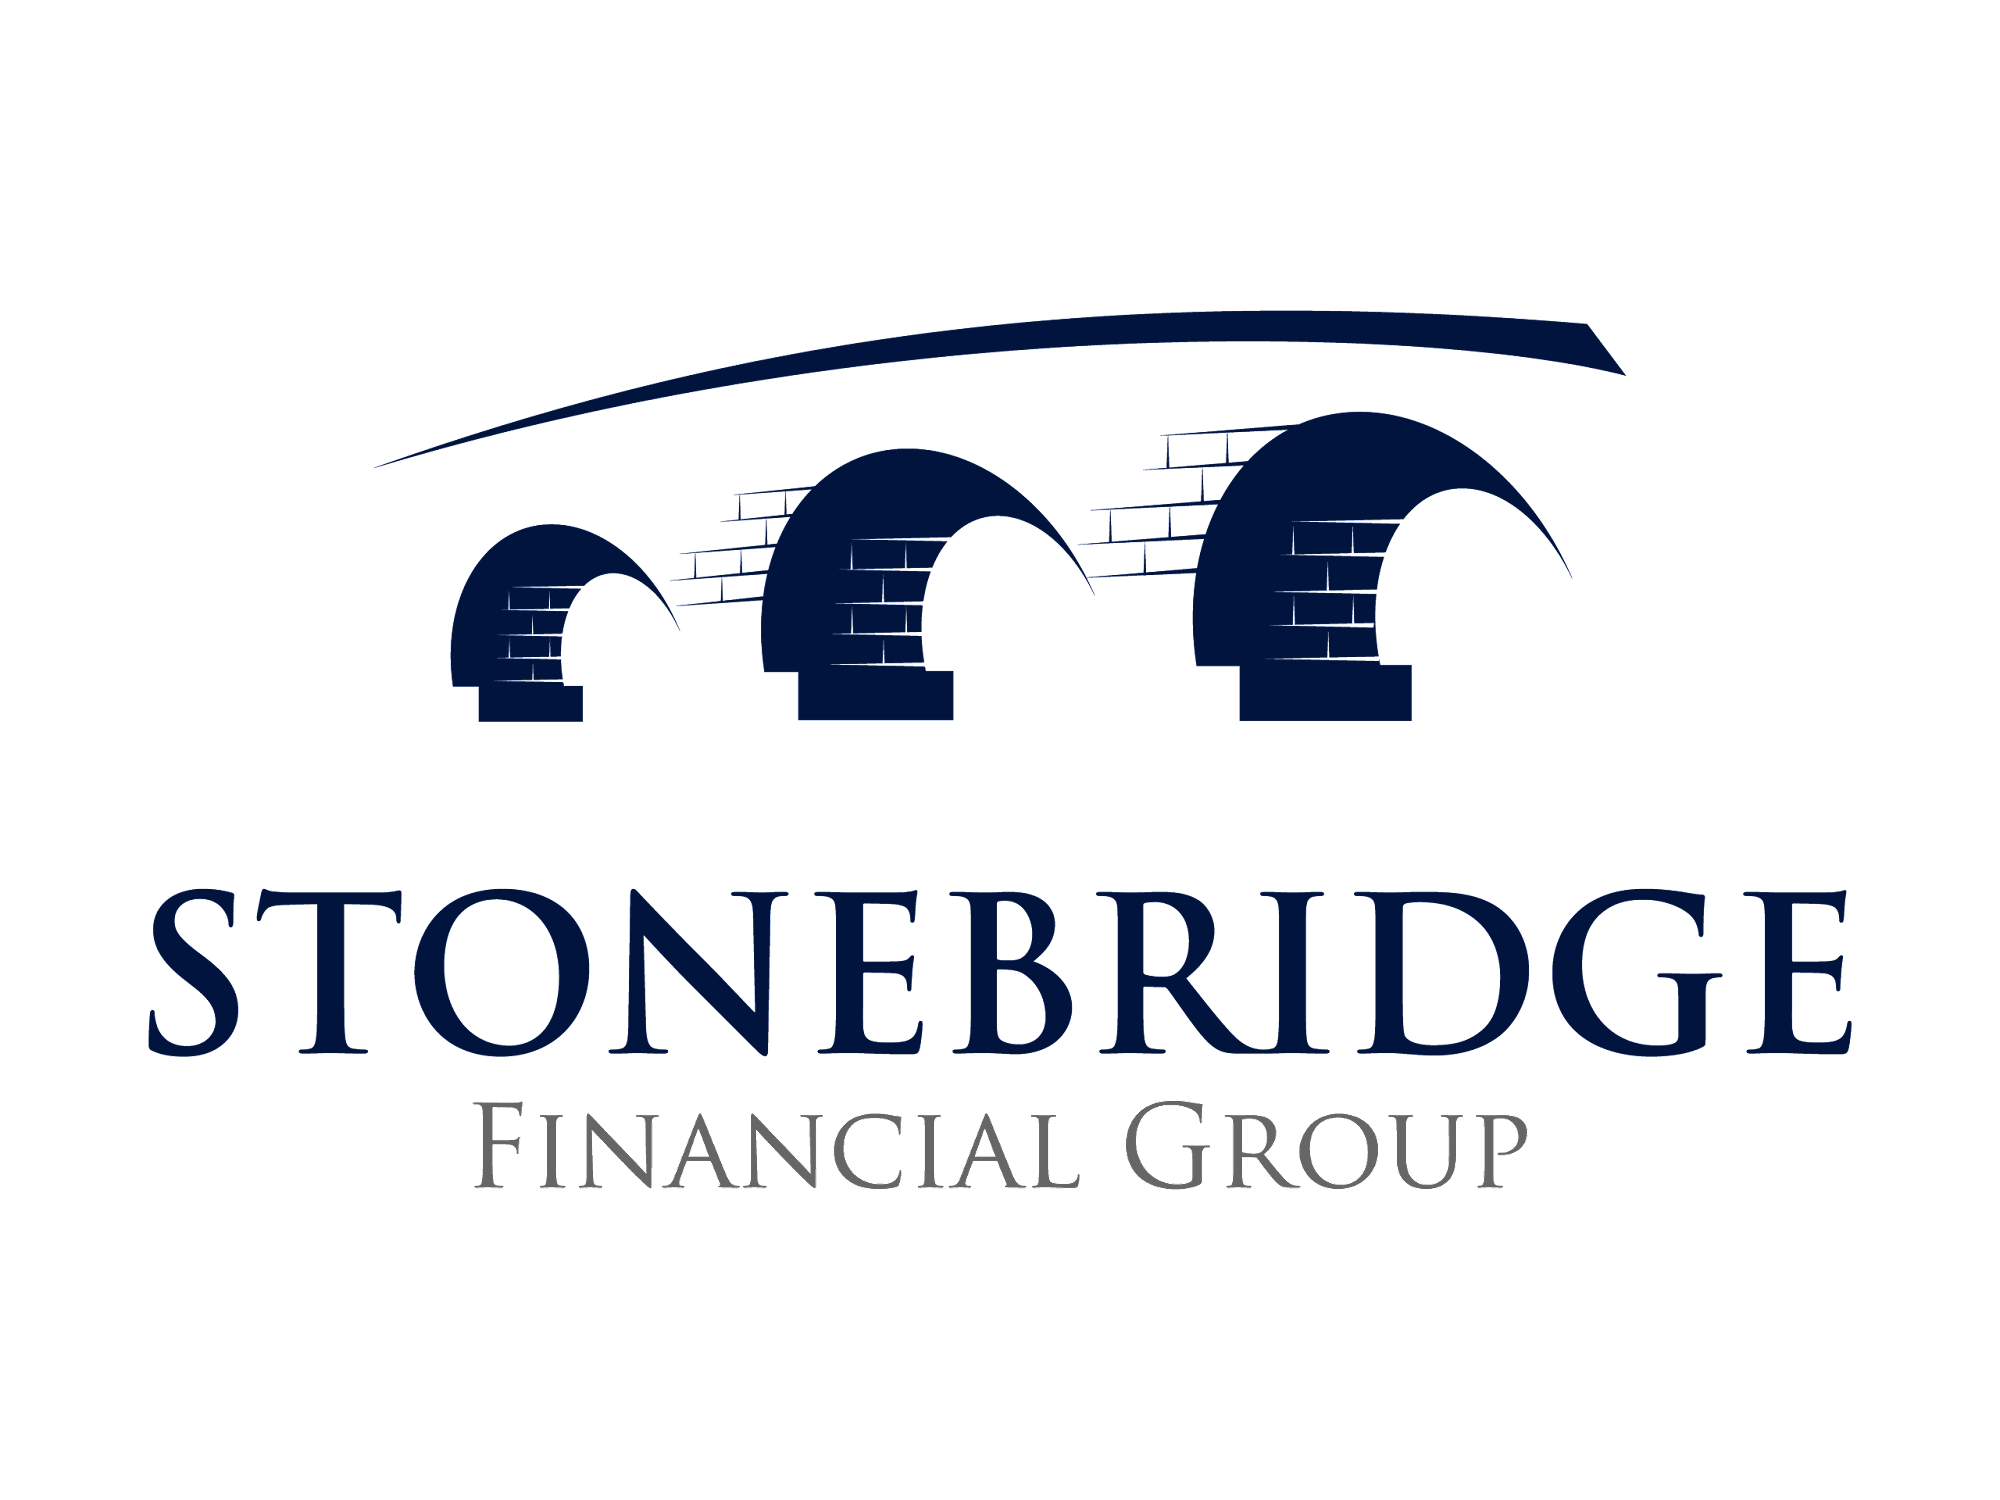 Stonebridge Financial Group 602 N Front St, Wormleysburg Pennsylvania 17043